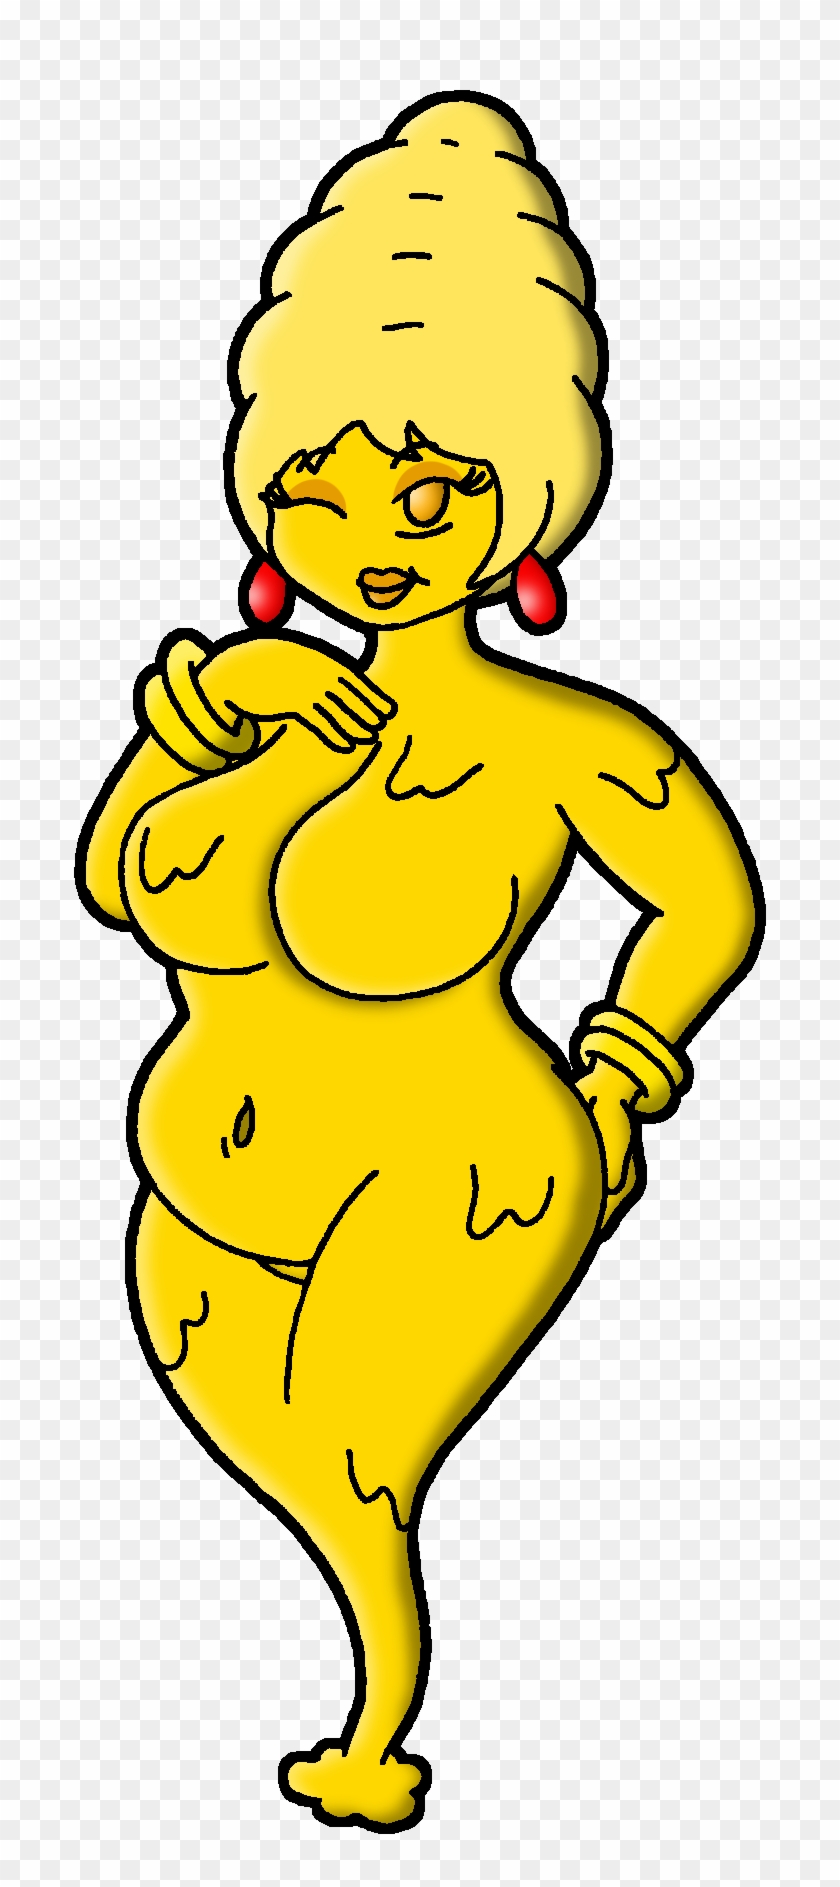 Golden Slime Woman By Polishedbrain - Cartoon #451096